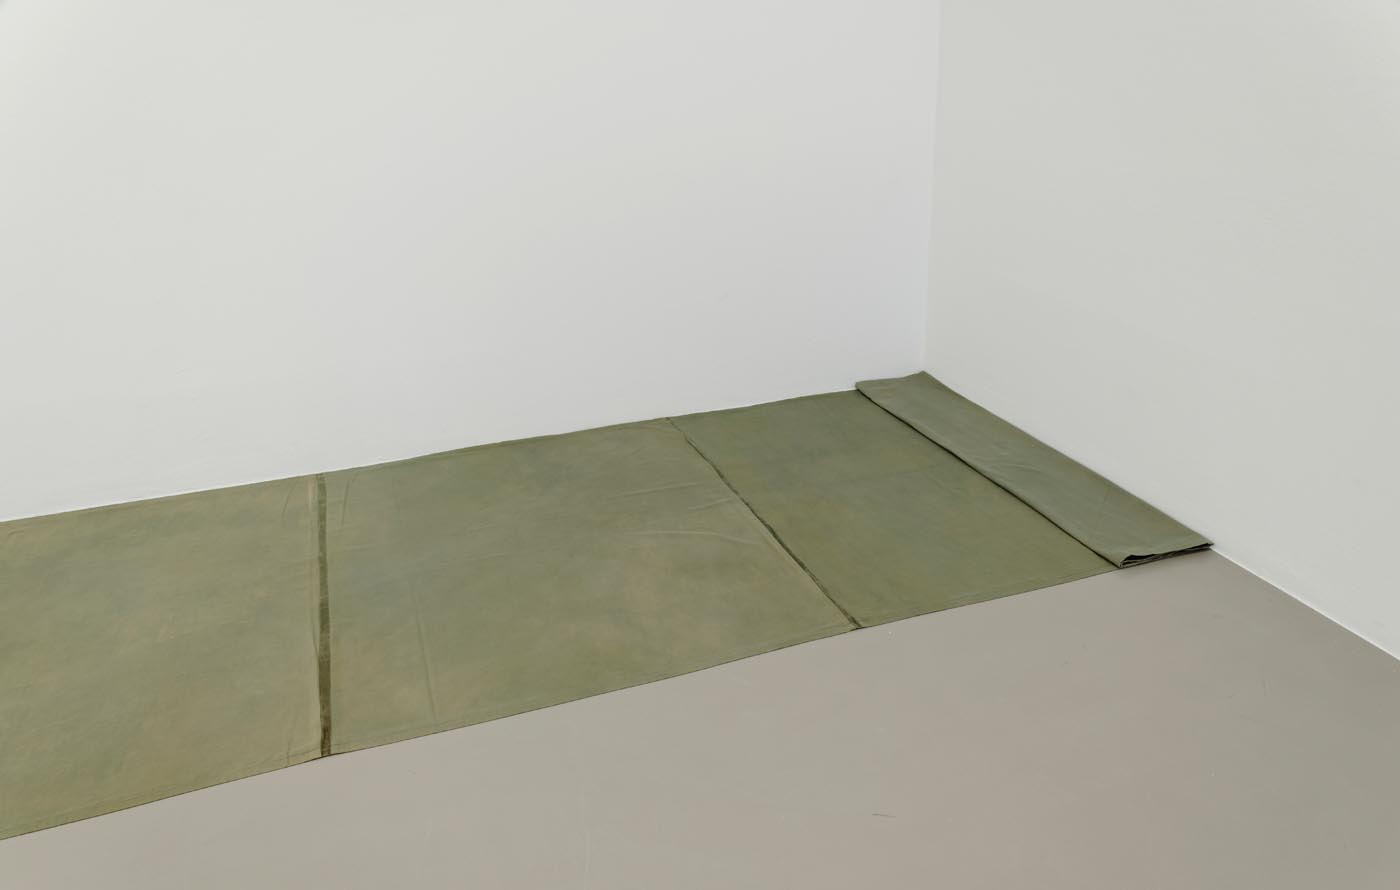 <p><em>Sidewalk cover (Chicago Version)</em>, 1998, Helen Mirra. Courtesy: Galerie Nordenhake, Berlin/Stockholm/Mexico.</p>